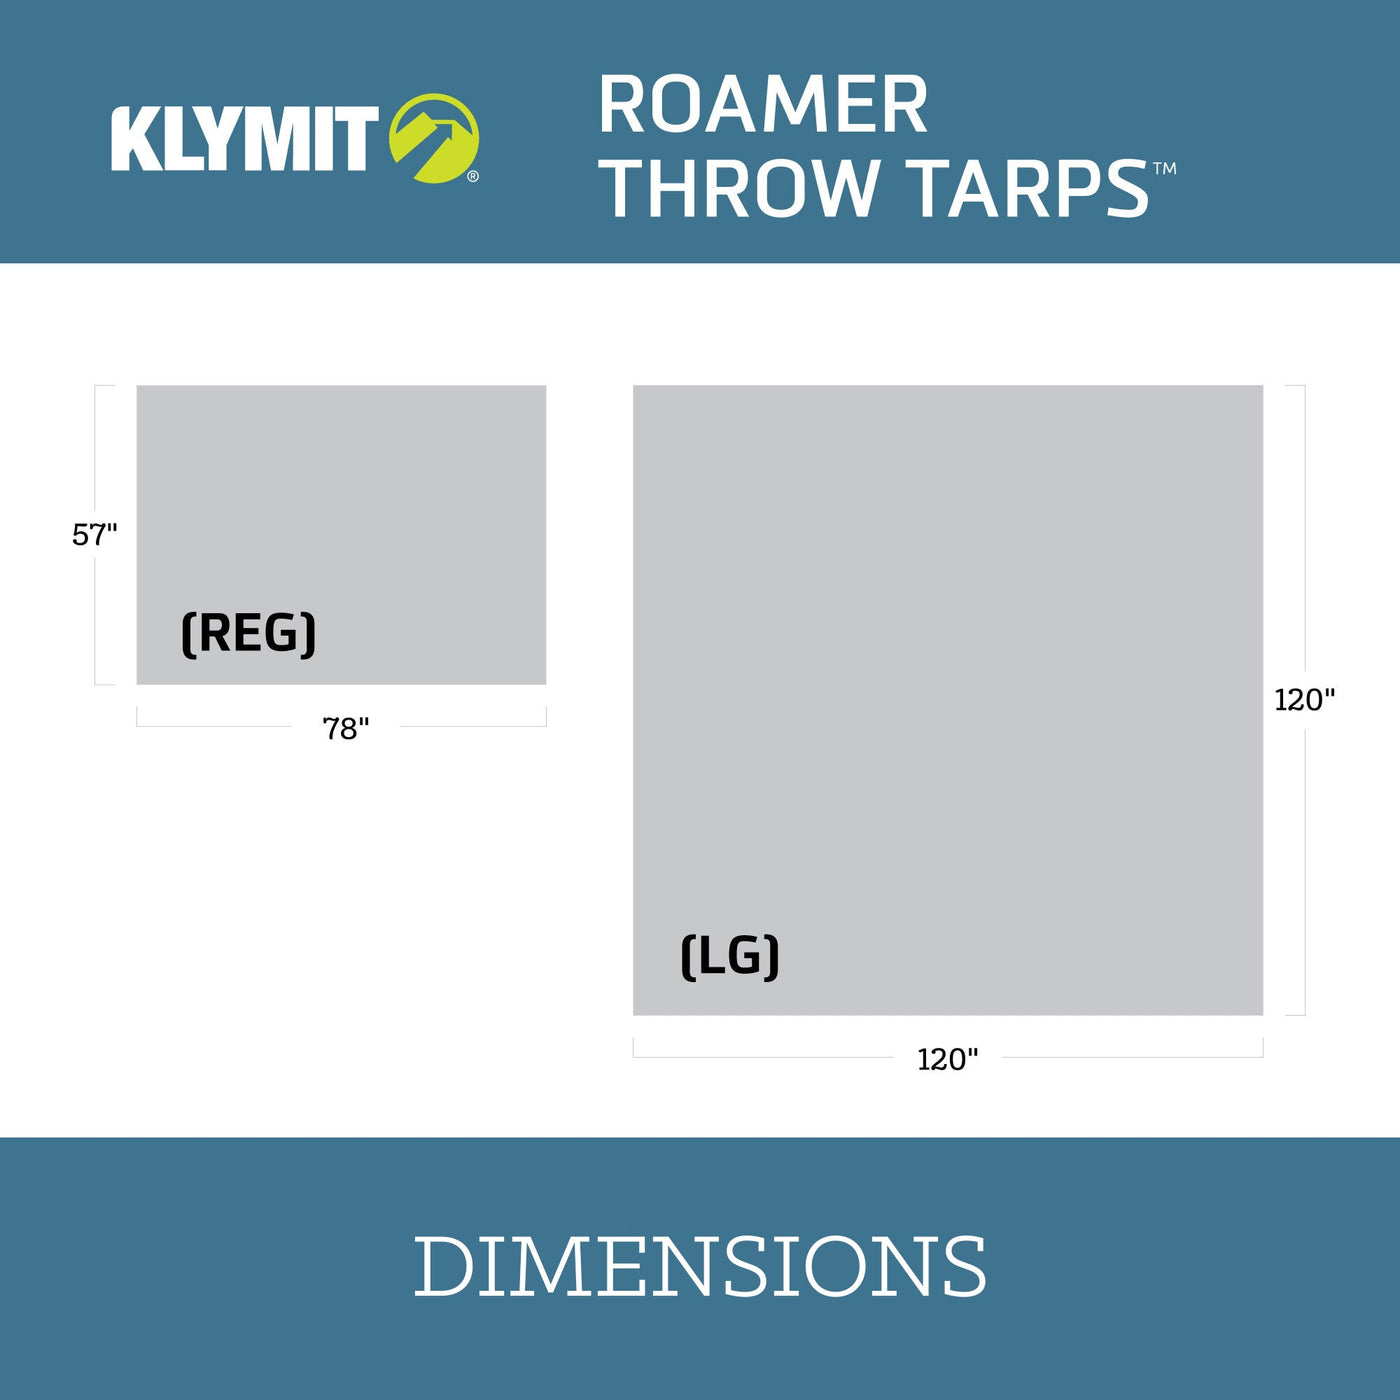 Roamer Throw Tarp by Klymit